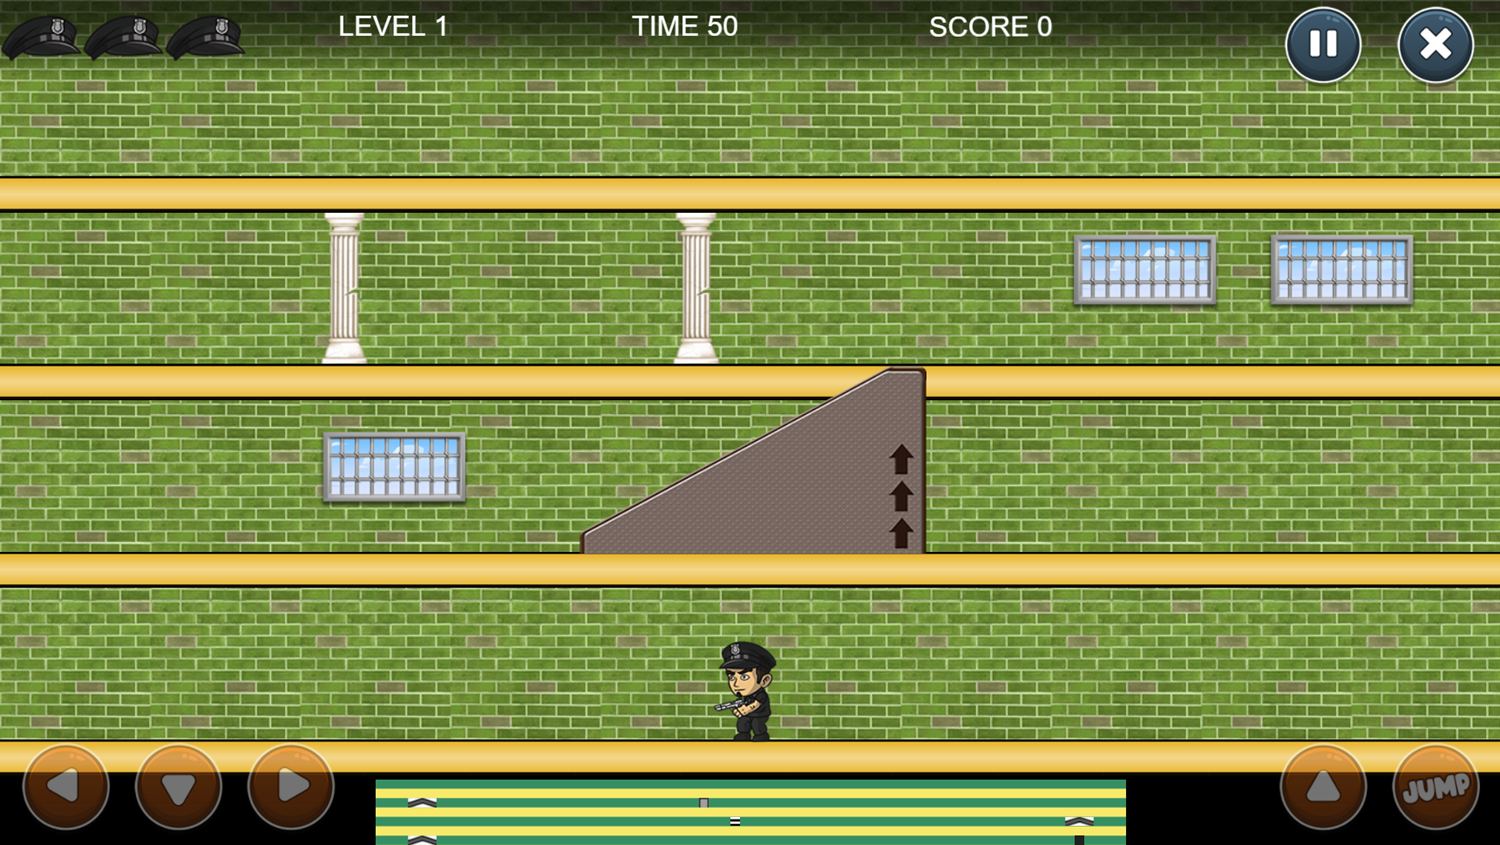 Police Chase Game Level Start Screenshot.